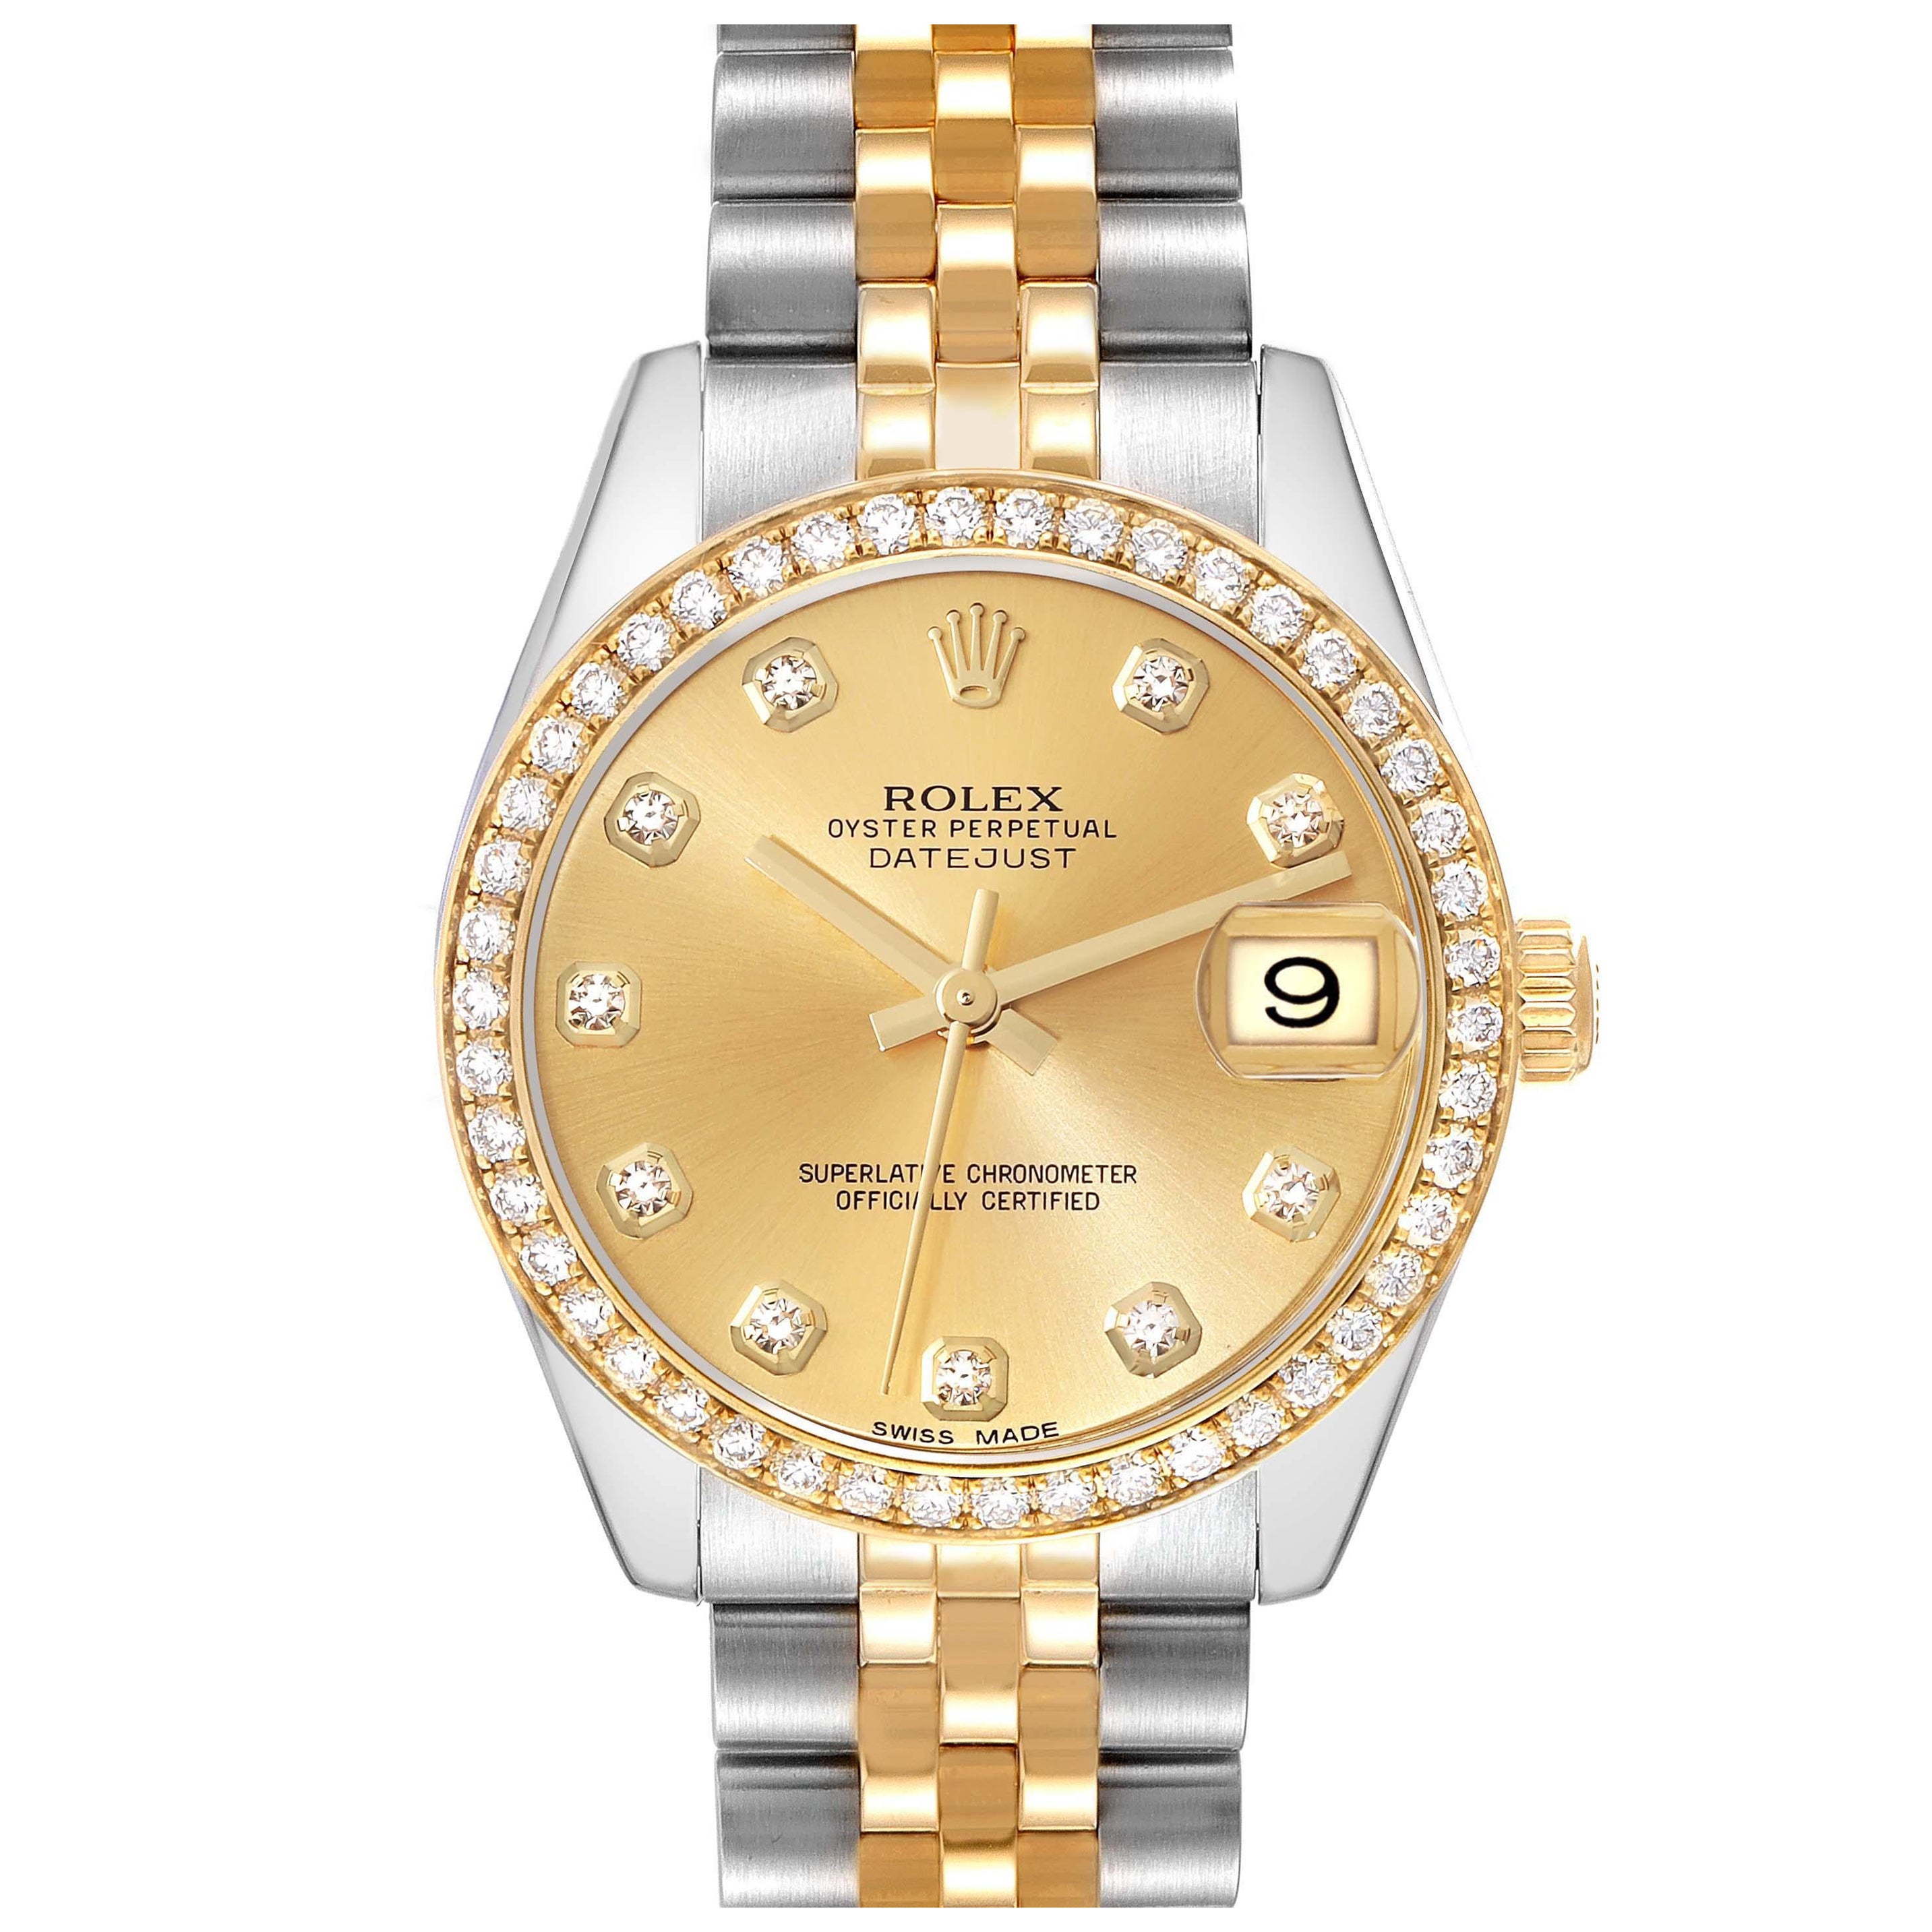 Rolex Datejust 31 Steel Yellow Gold Diamond Ladies Watch 178383 Box Card